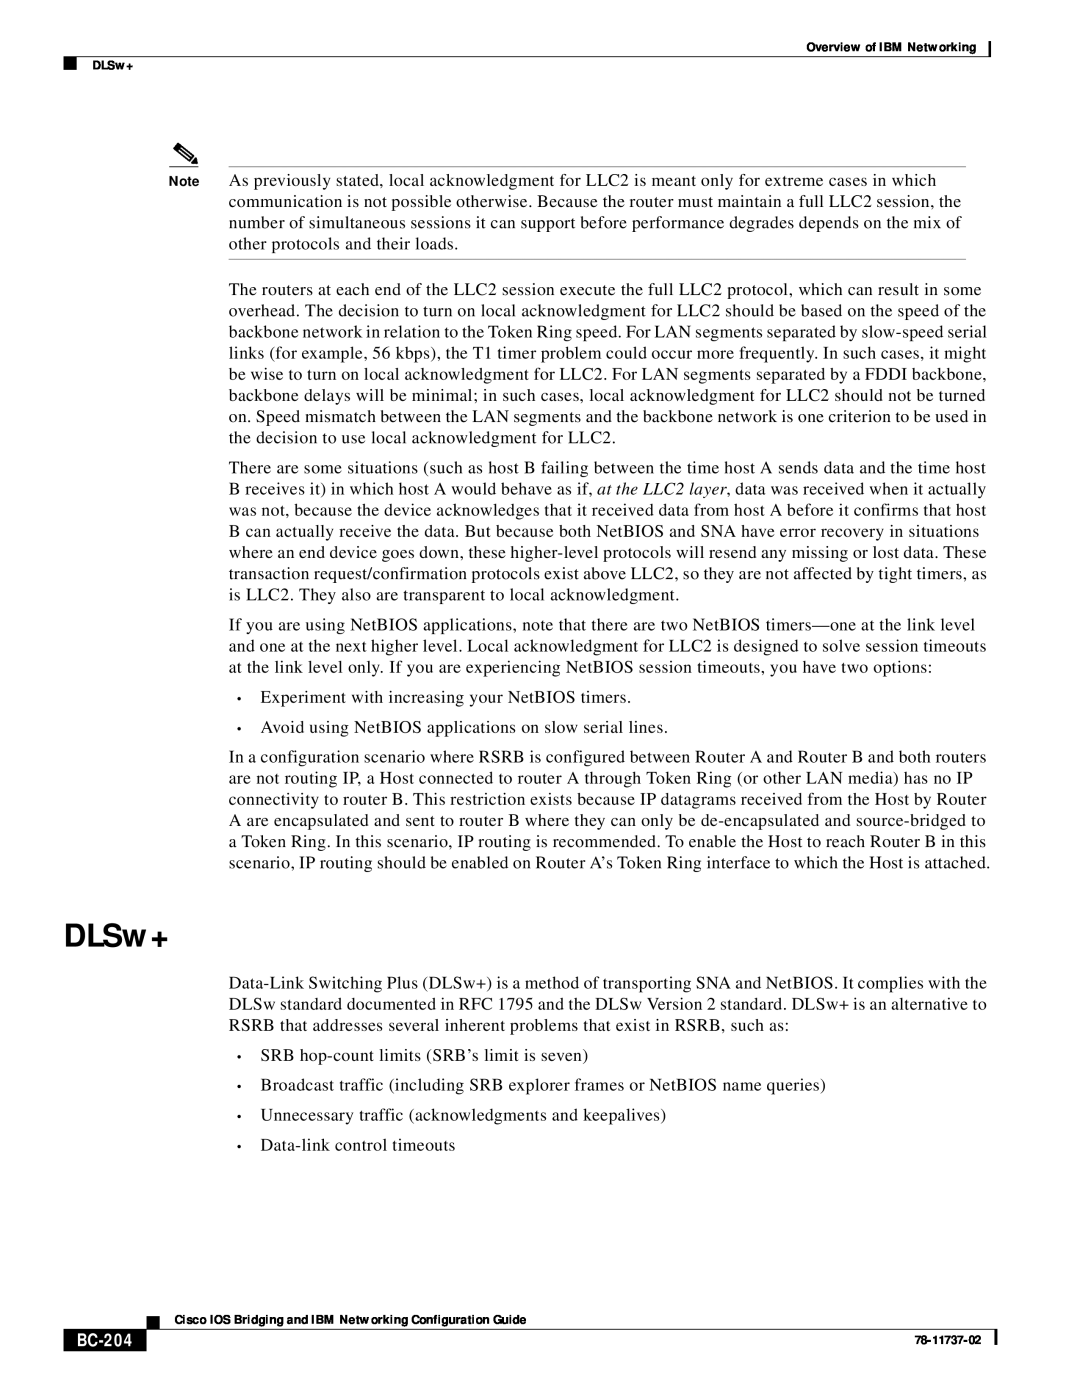 IBM BC-201 manual DLSw+, BC-204 